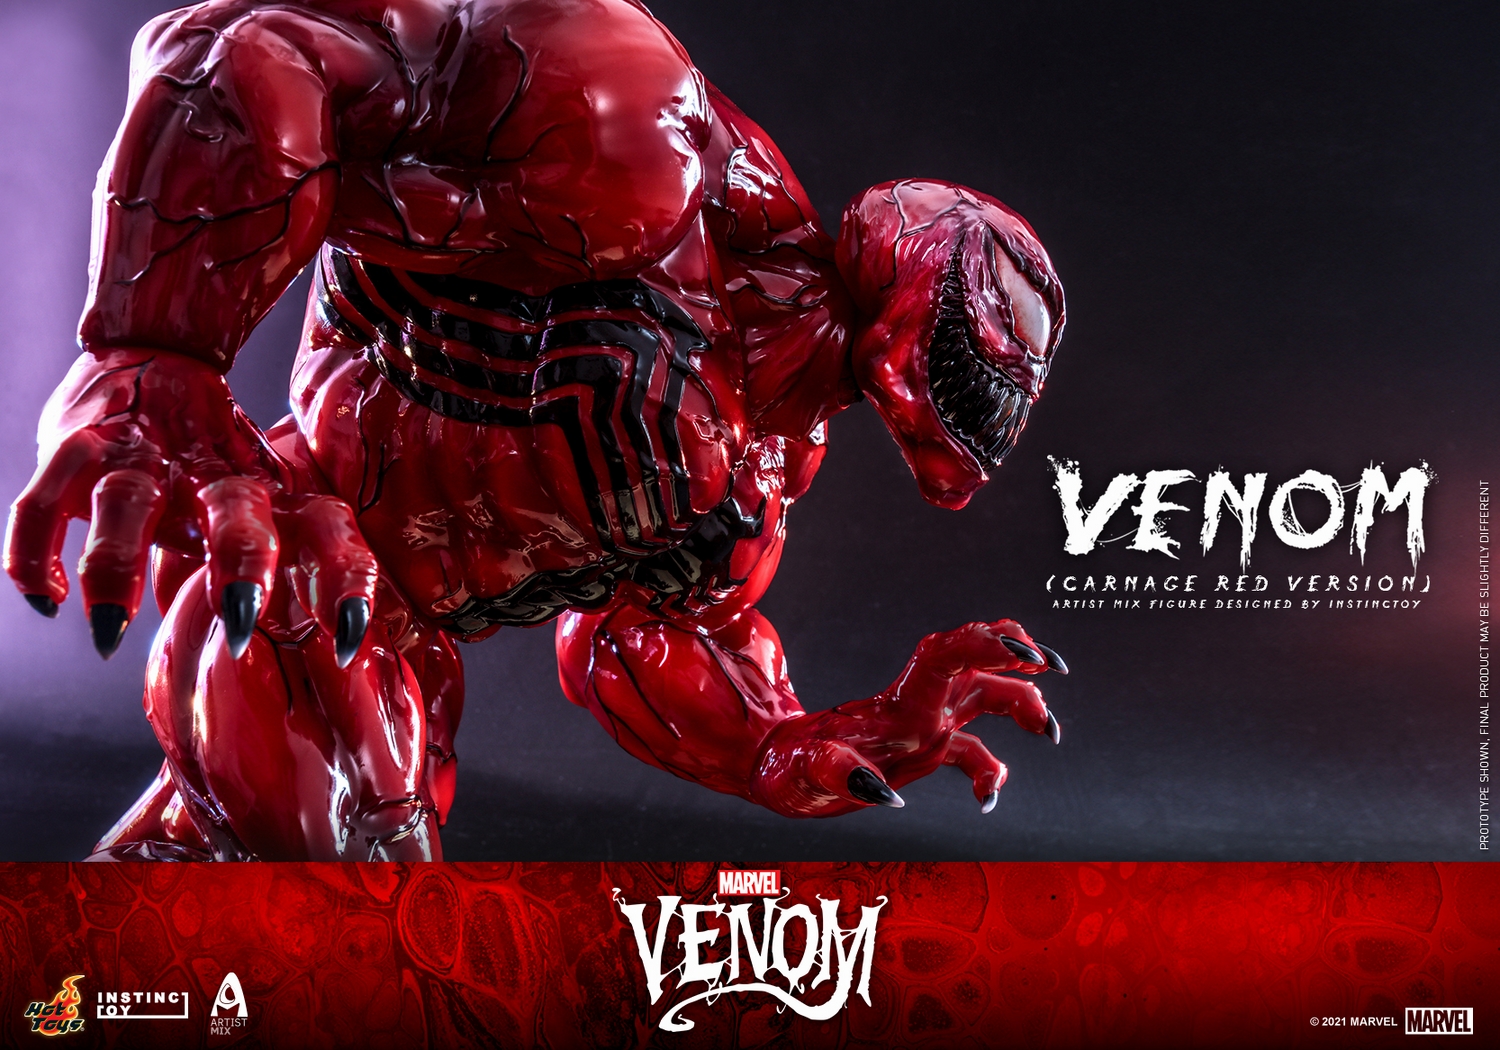 Hot Toys - Venom (Carnage Red Version) Artist Mix Figure Designed by Instinctoy_PR1.jpg